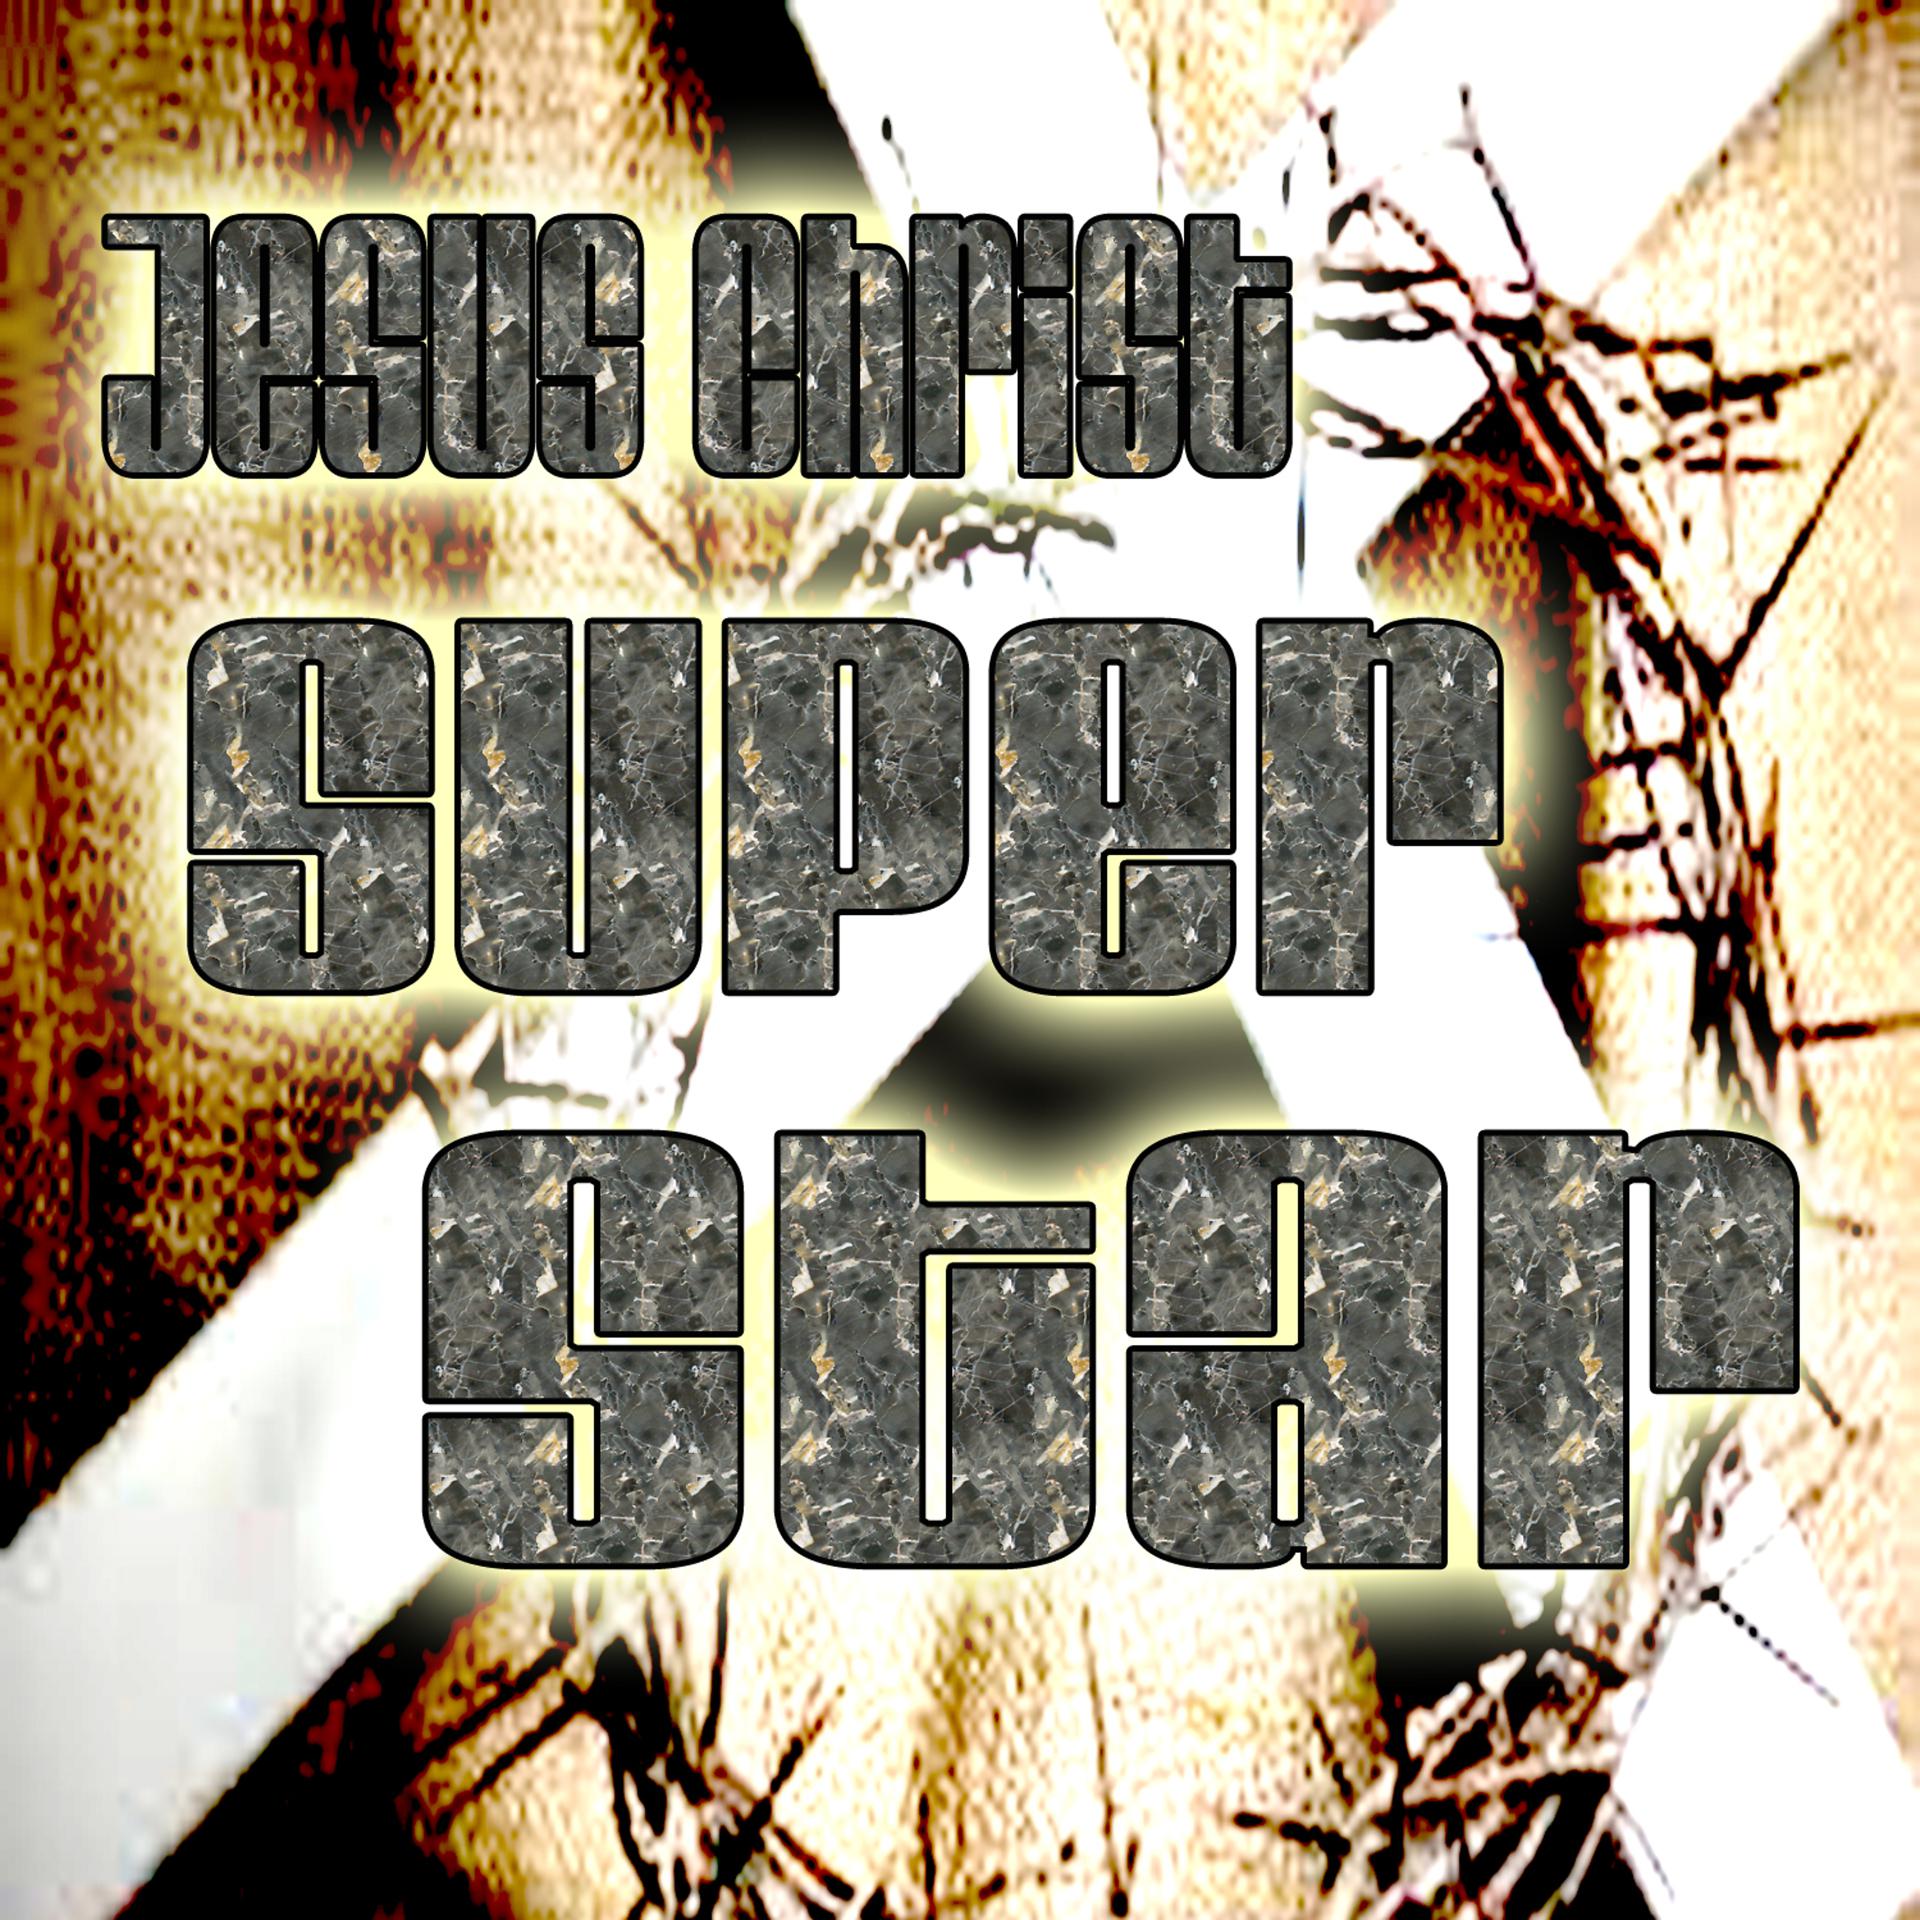 Постер альбома Jesus Christ Superstar